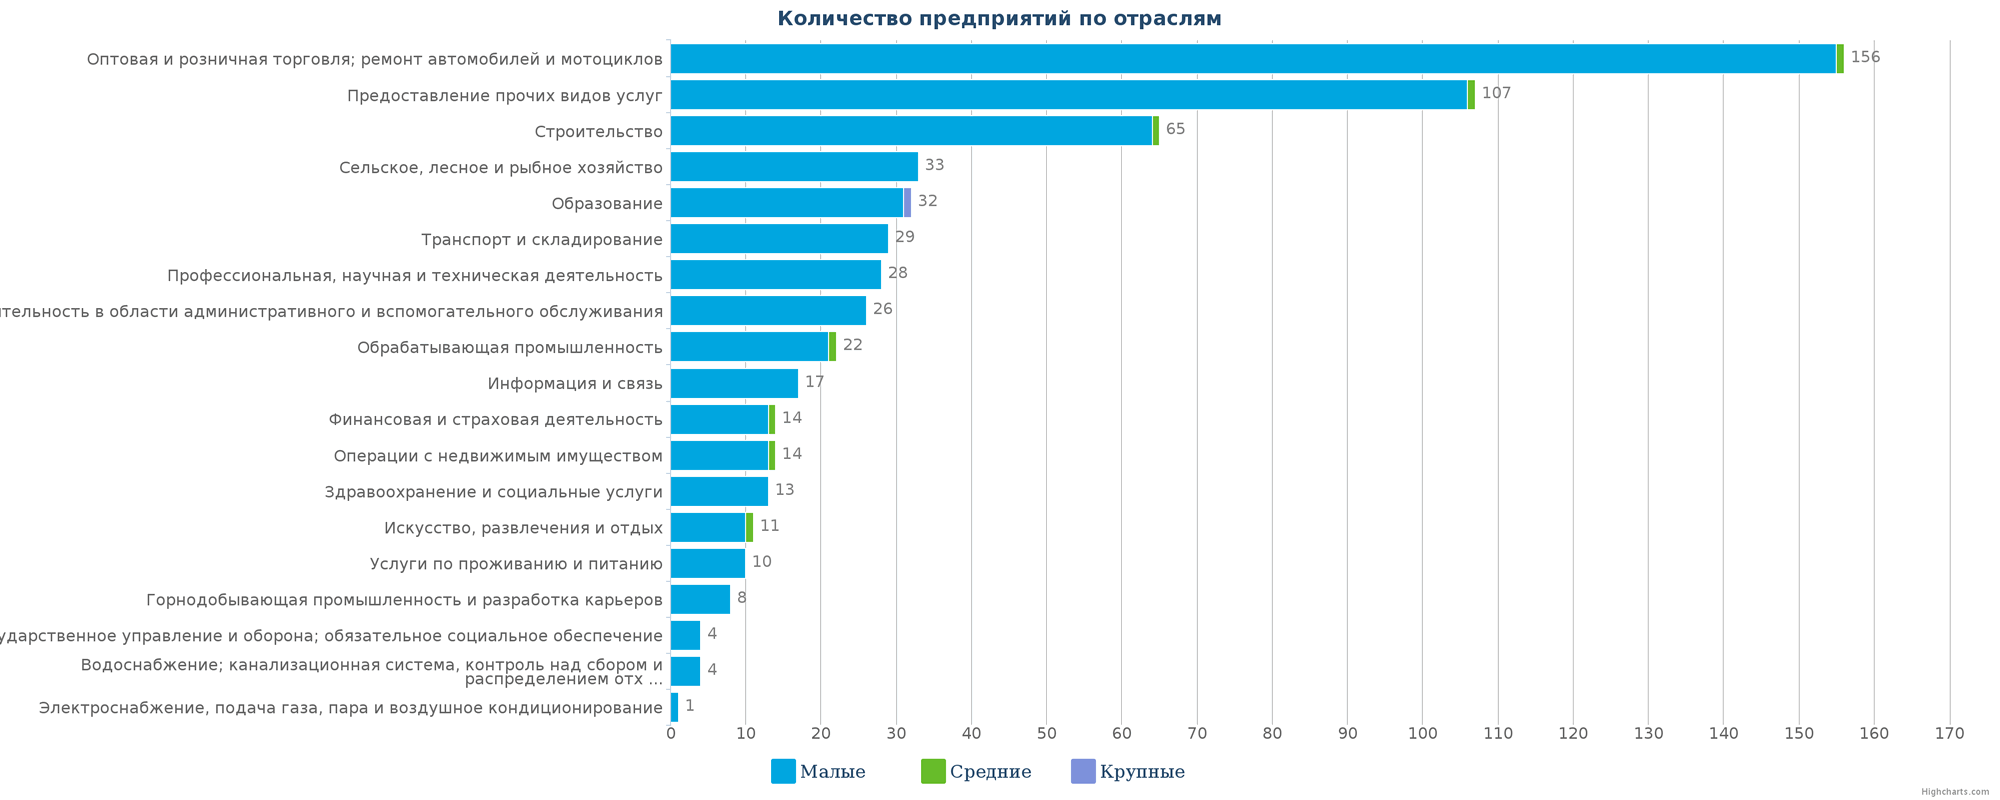 Новые предприятия в каталоге Казахстана